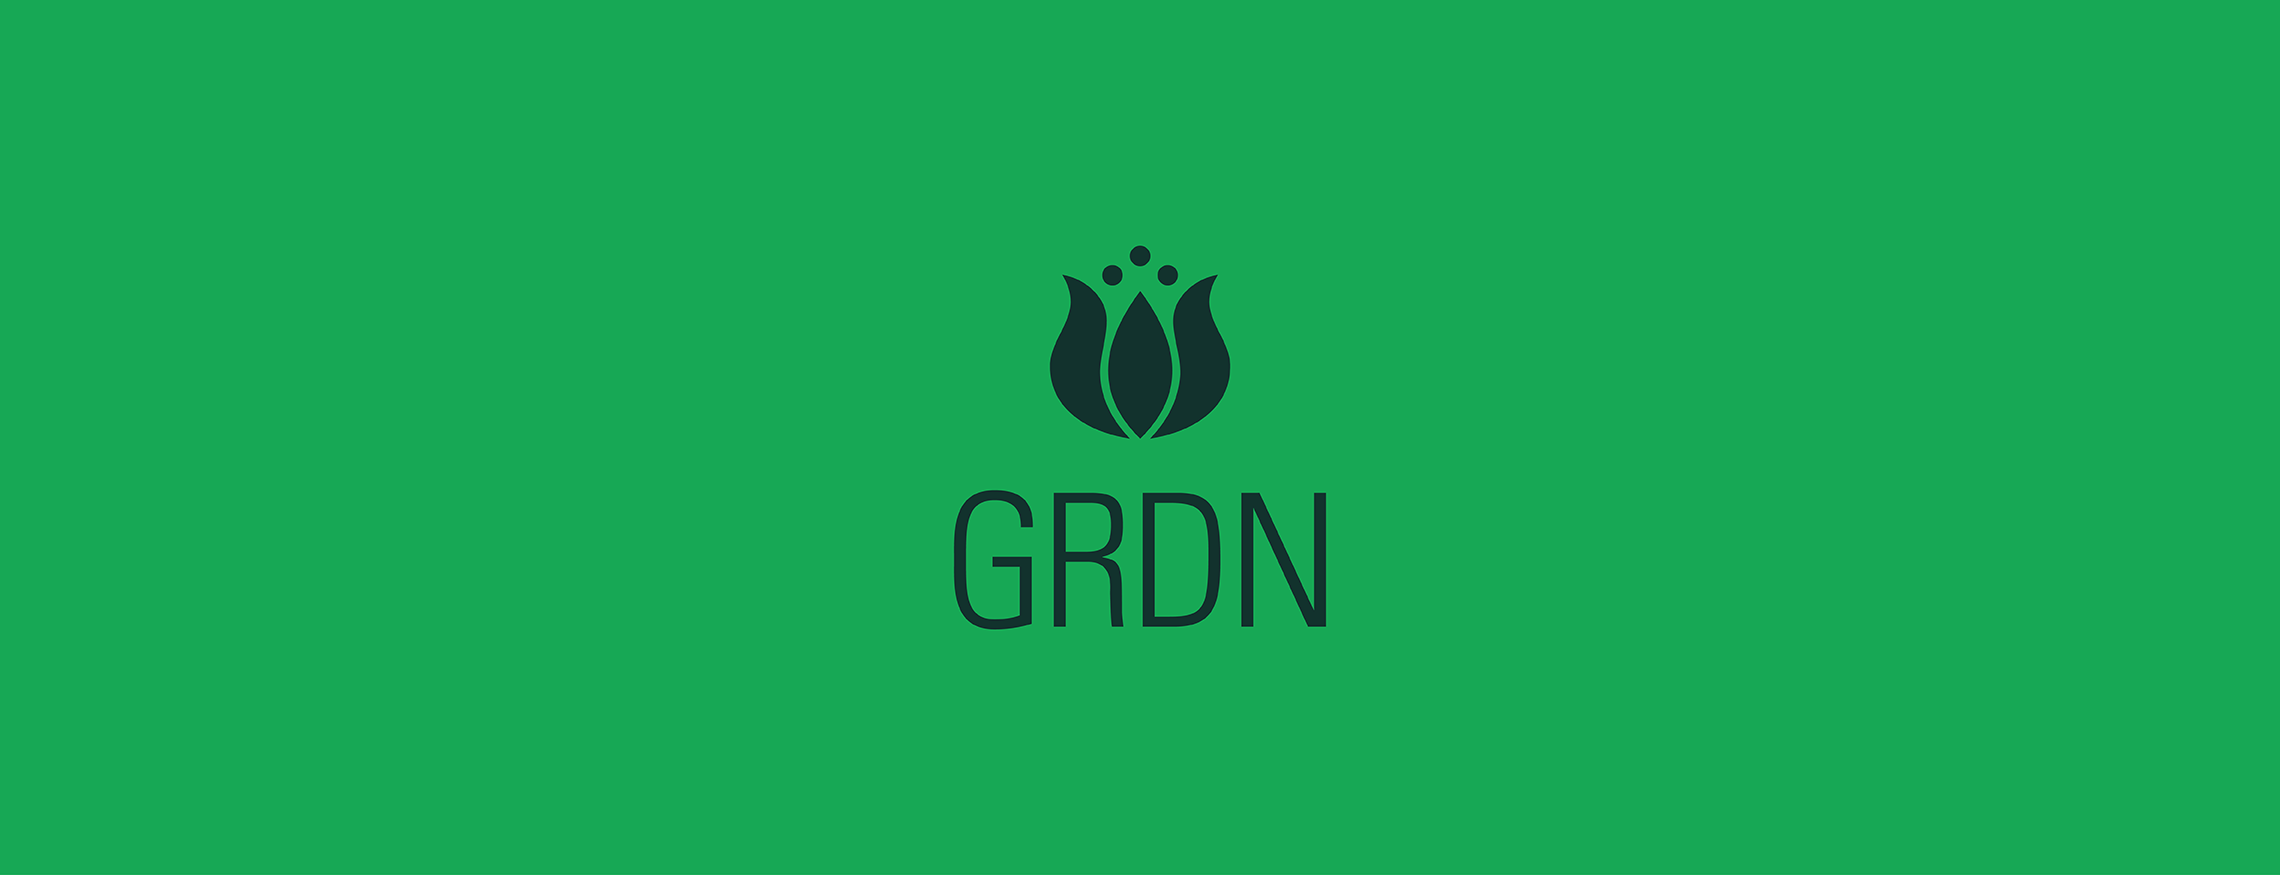 GRDN - logo design for a specialty garden and home store.